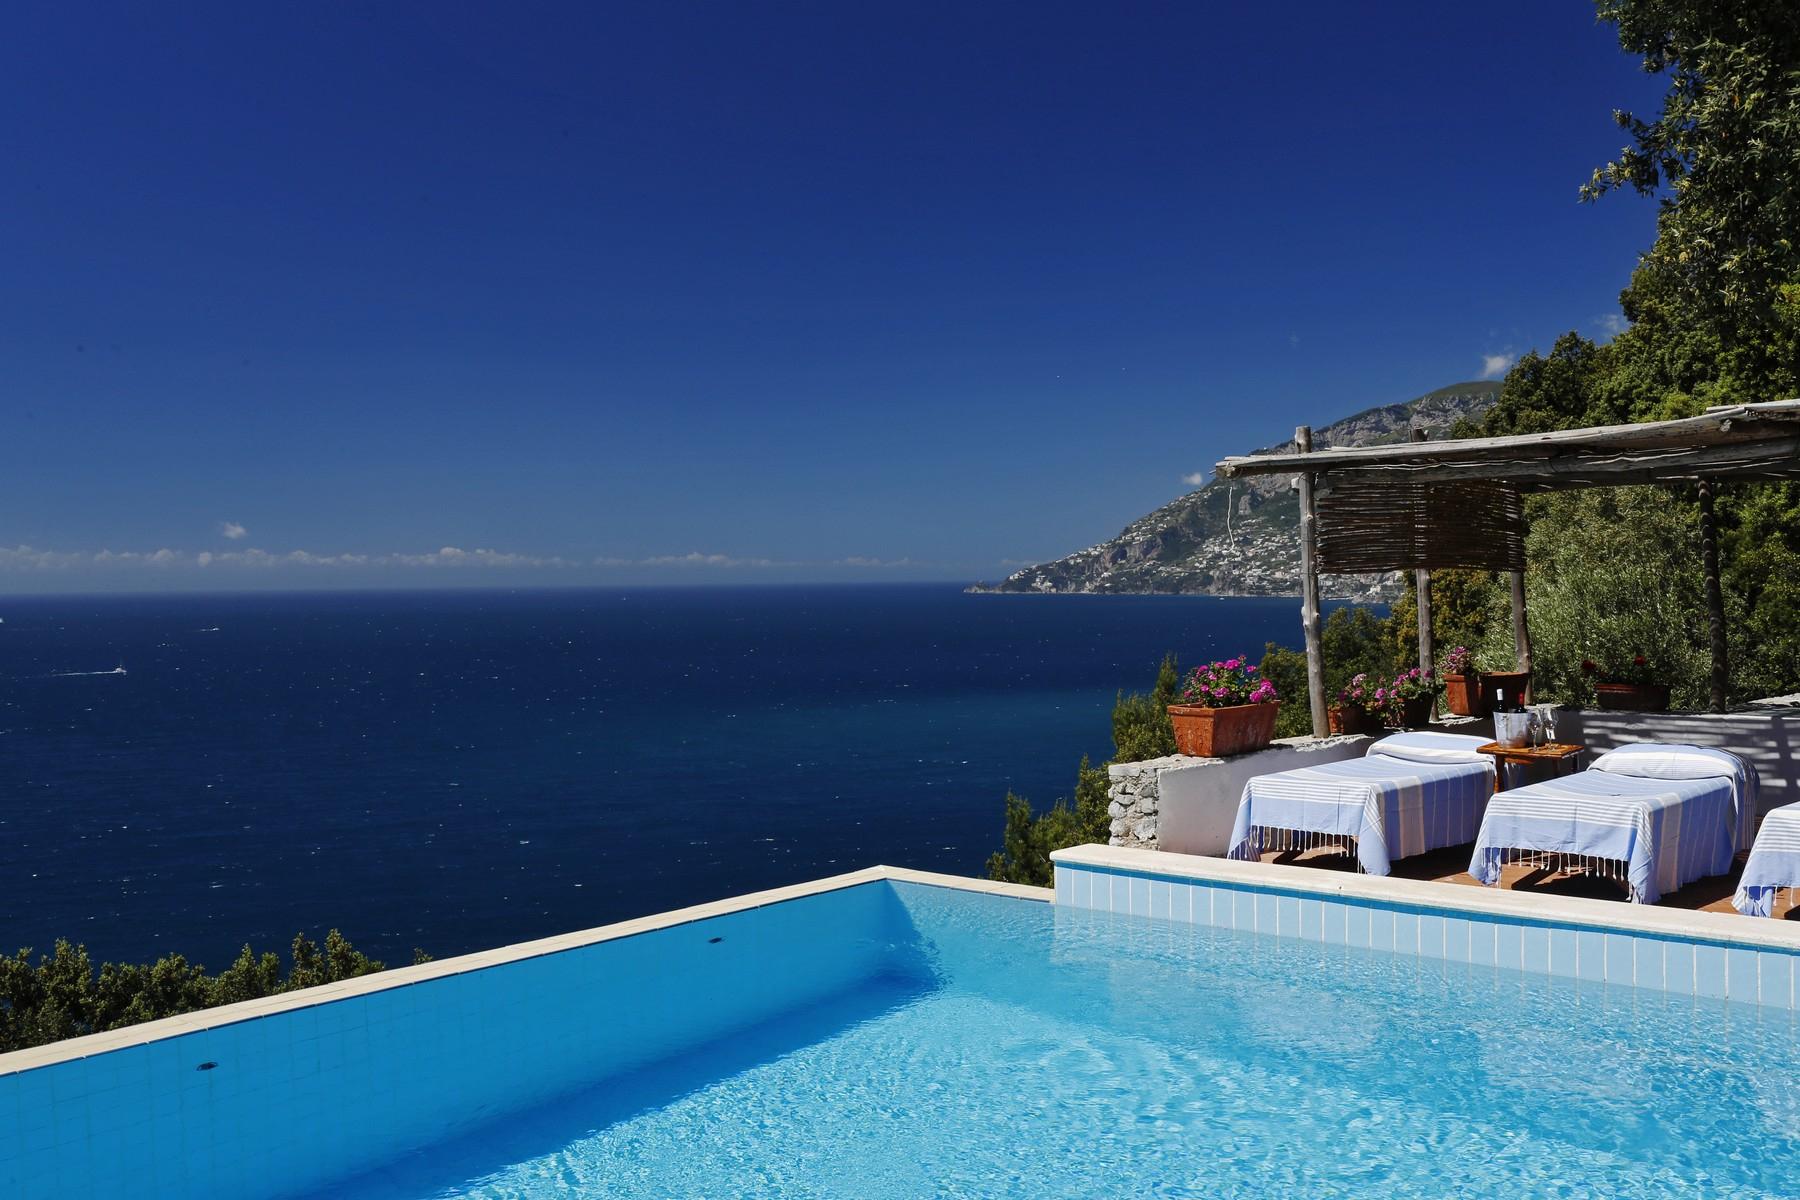 Villa pied dans l'eau on the Amalfi Coast - 6